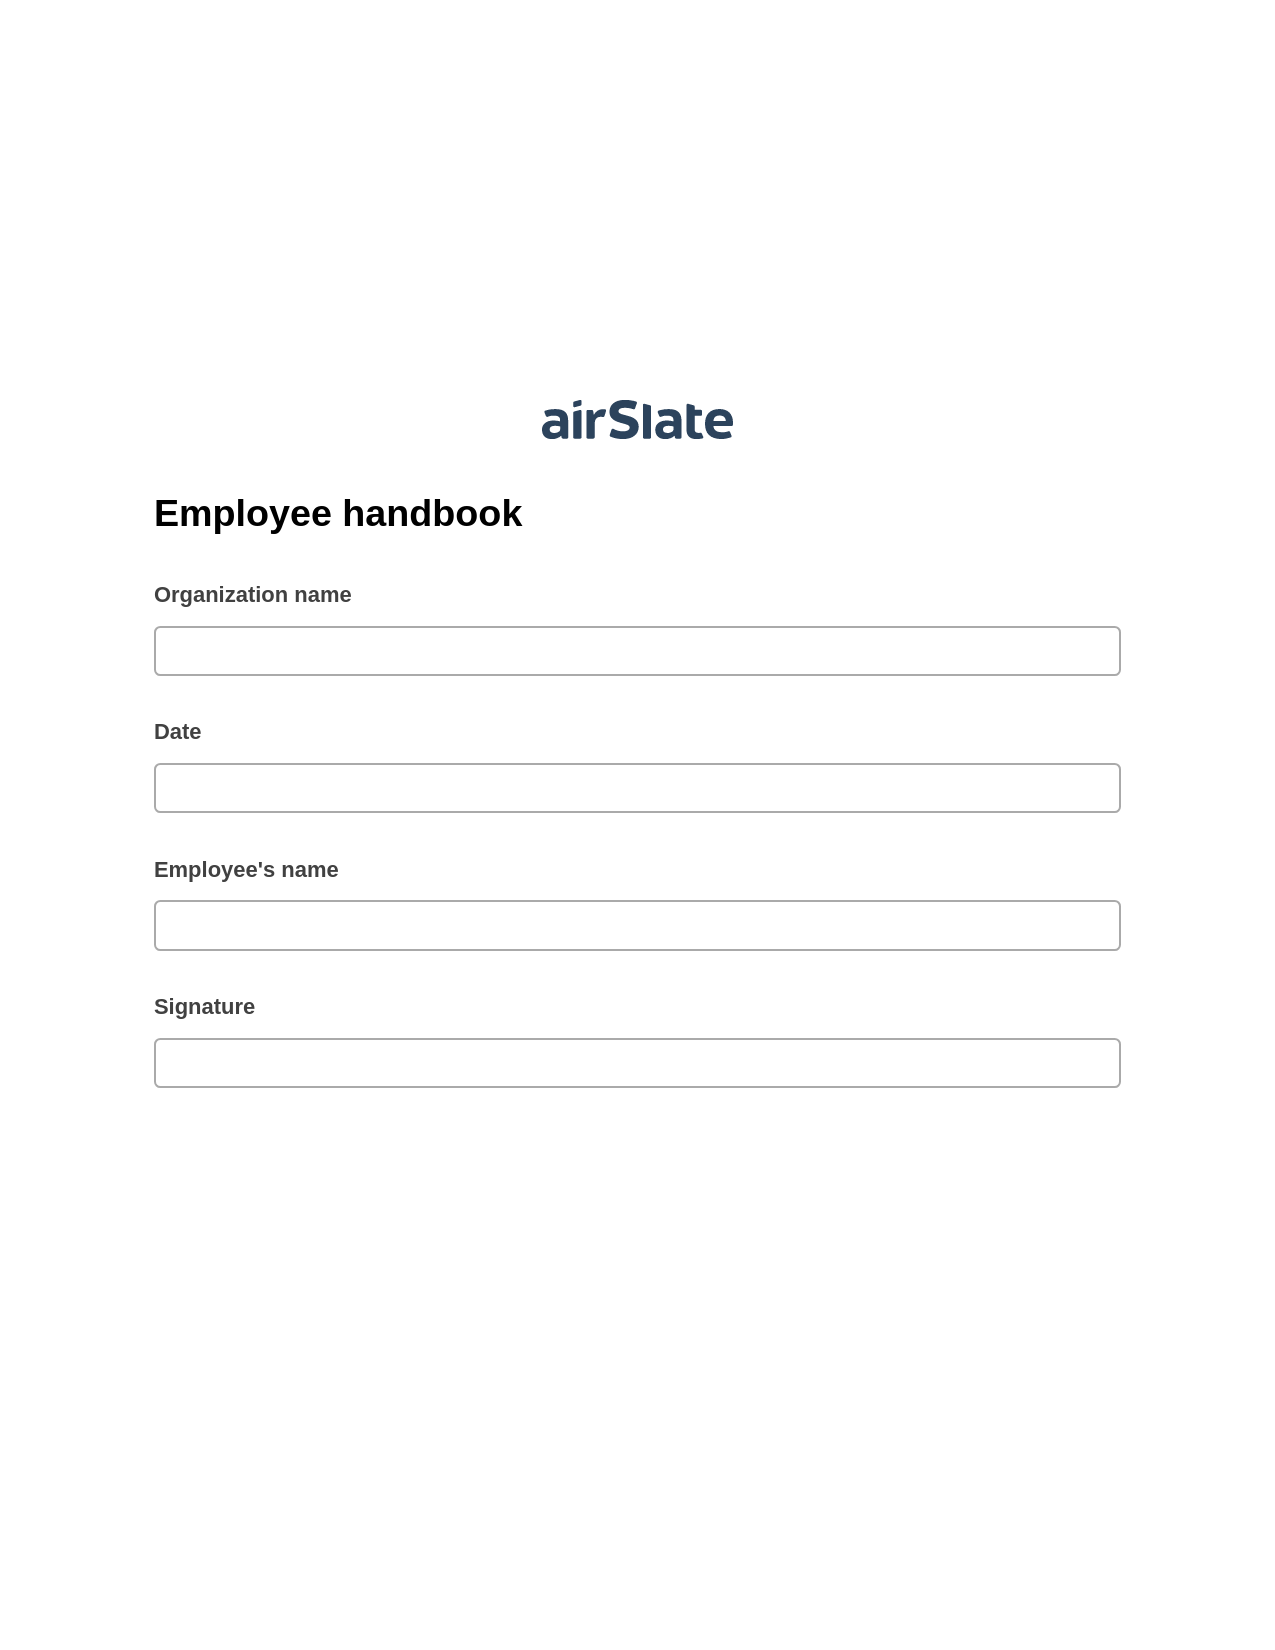 Multirole Employee handbook Pre-fill Slate from MS Dynamics 365 Records Bot, Email Notification Bot, Box Bot